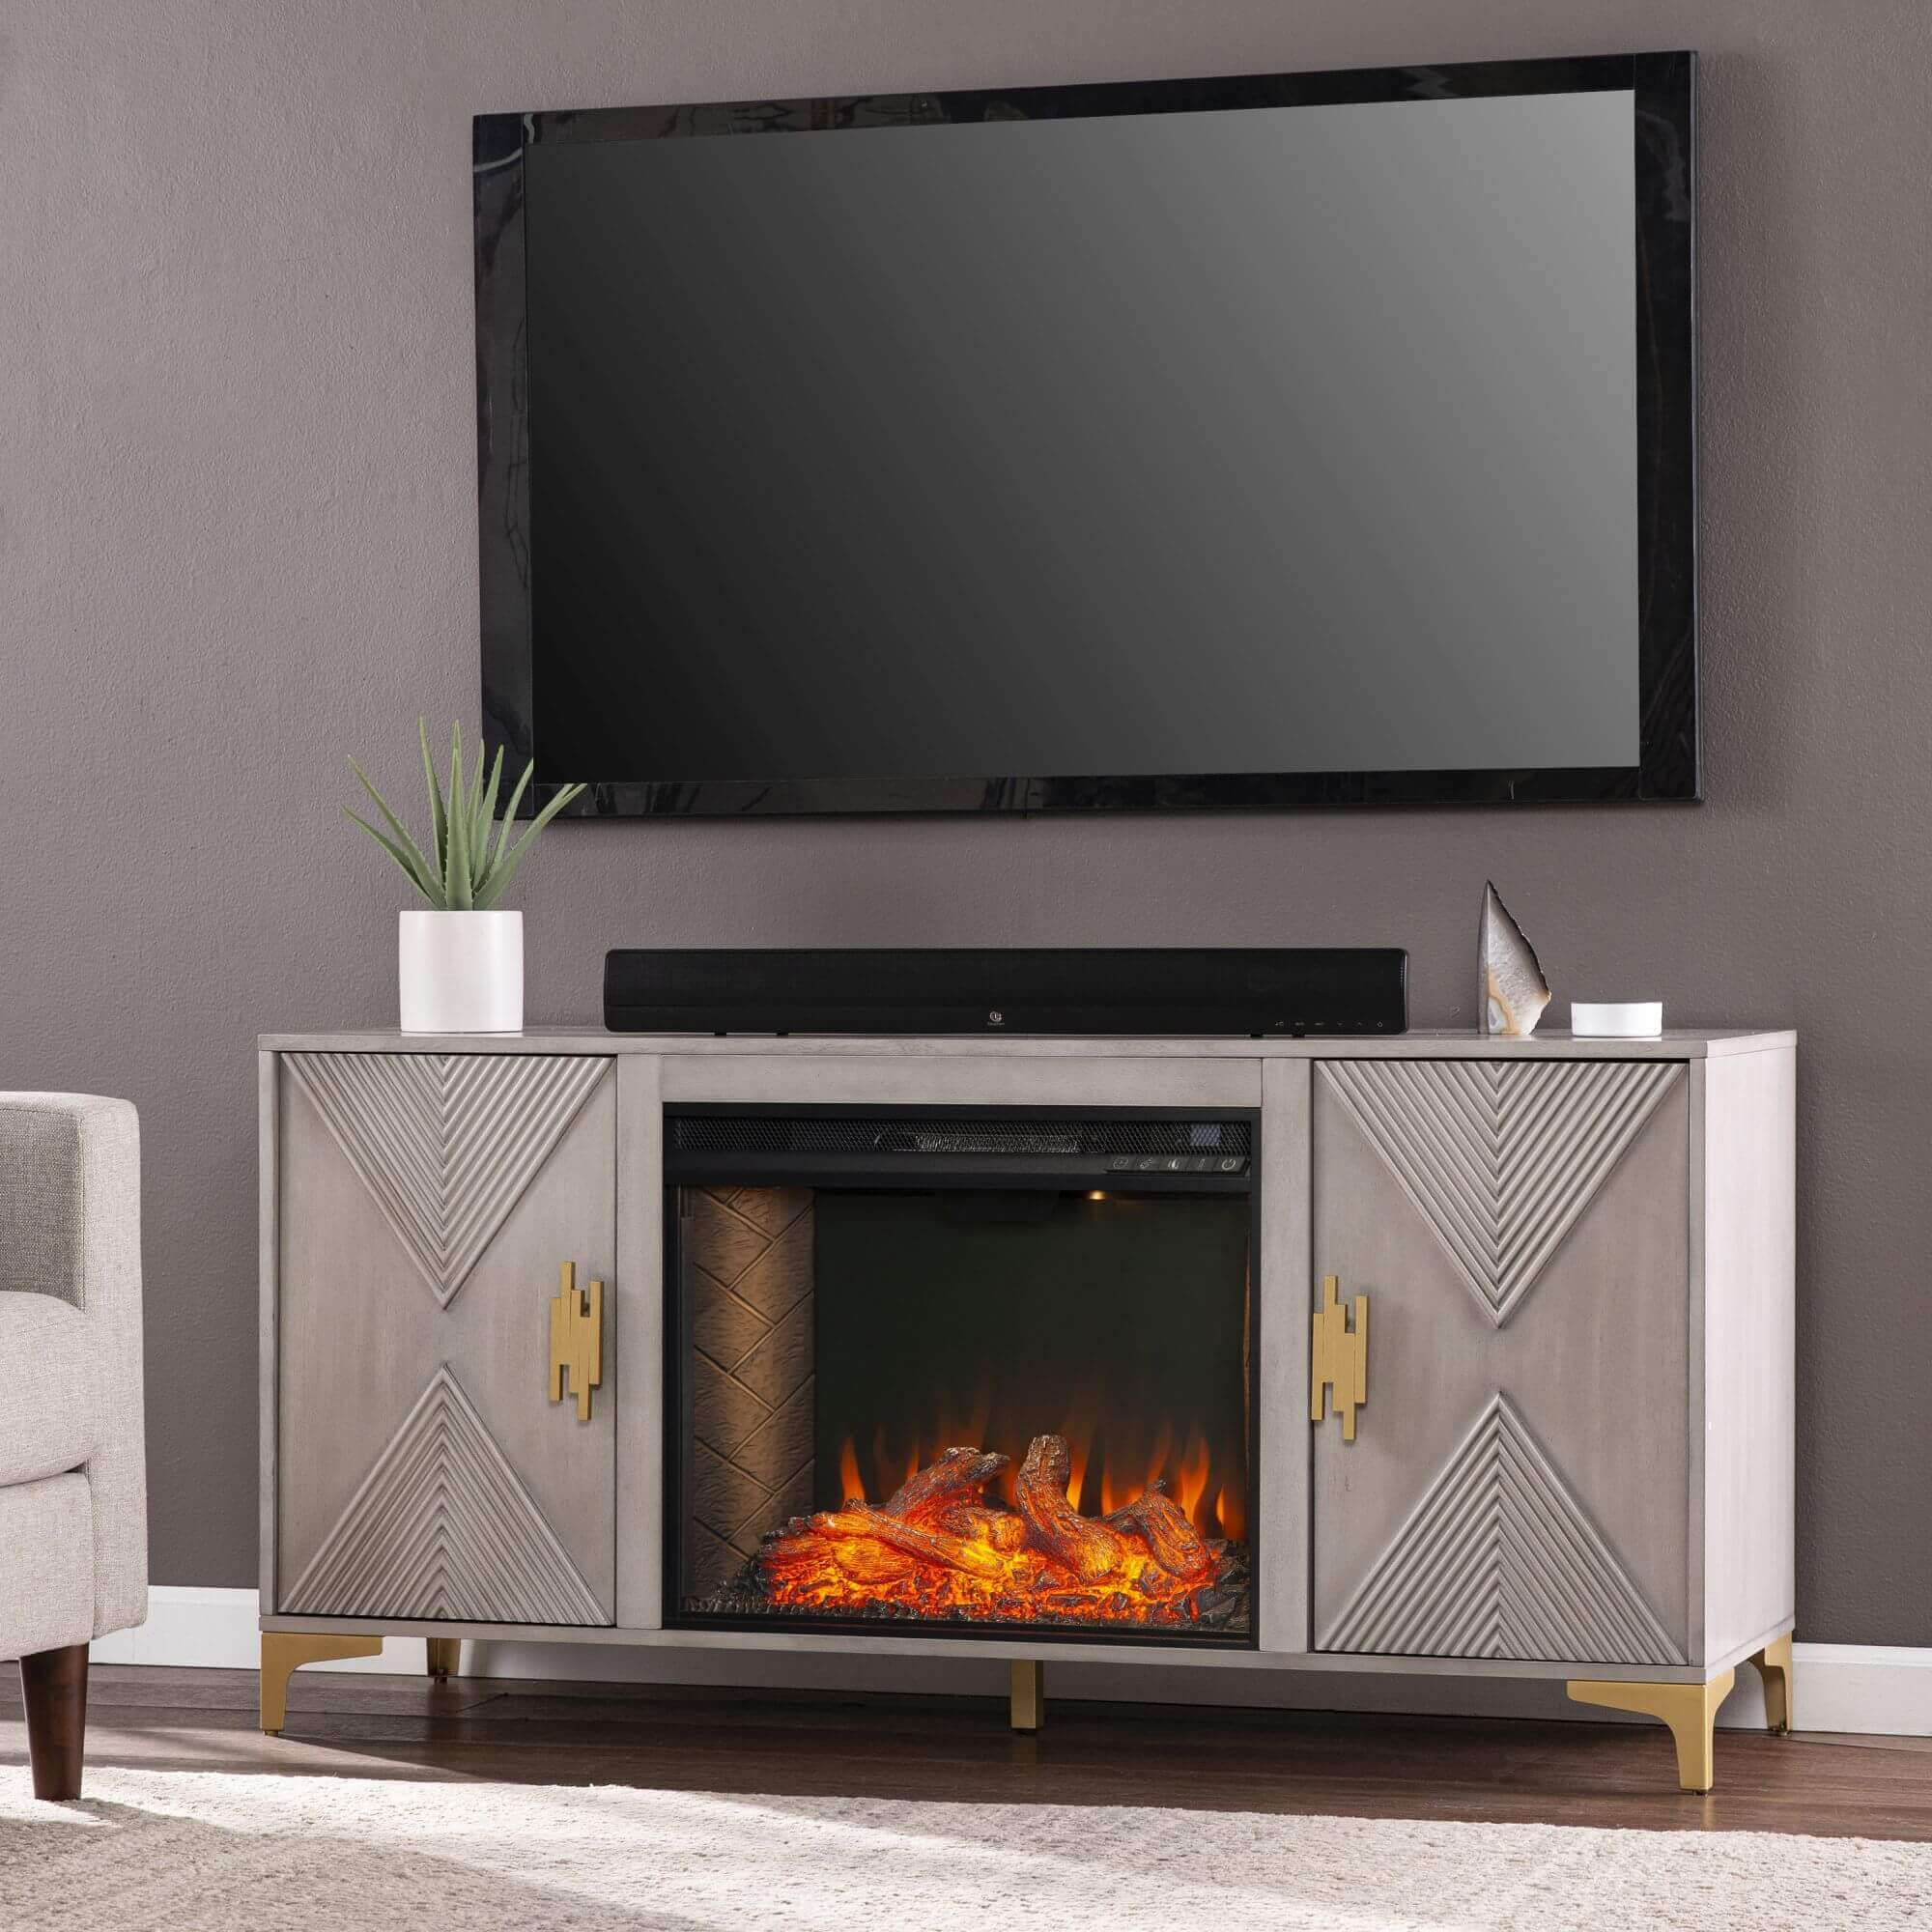 Lantara Smart Fireplace with Media Storage